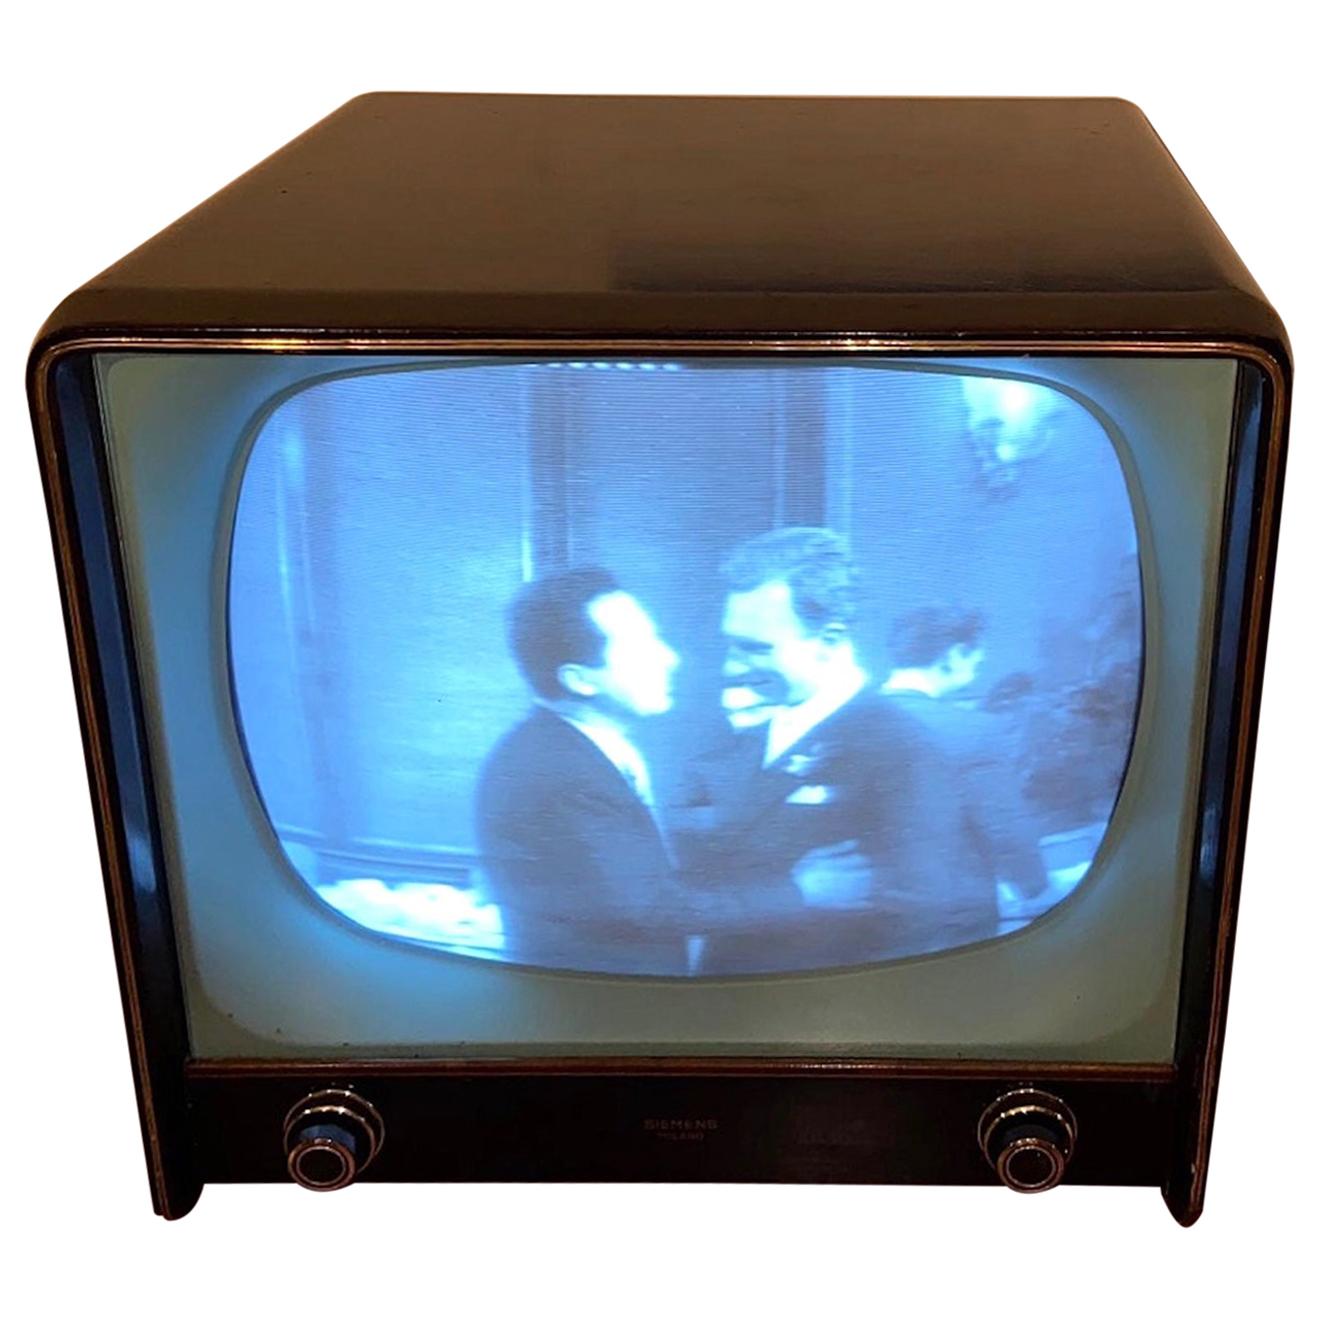 Vintage Siemens Television Set, Model 2207, 1957